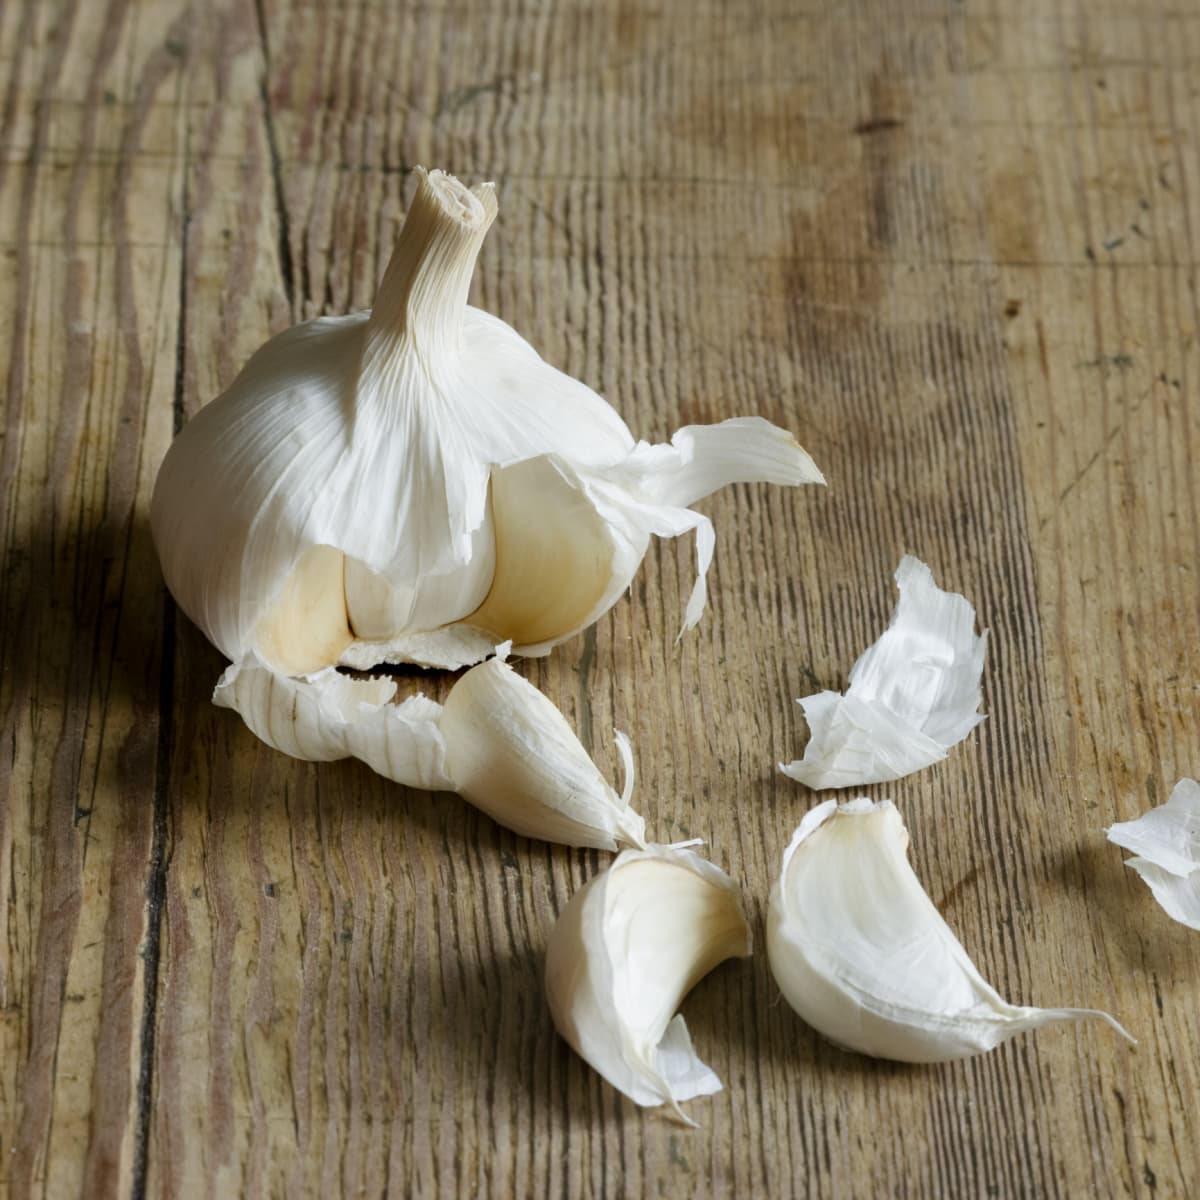 Peeled garlic cloves on wood